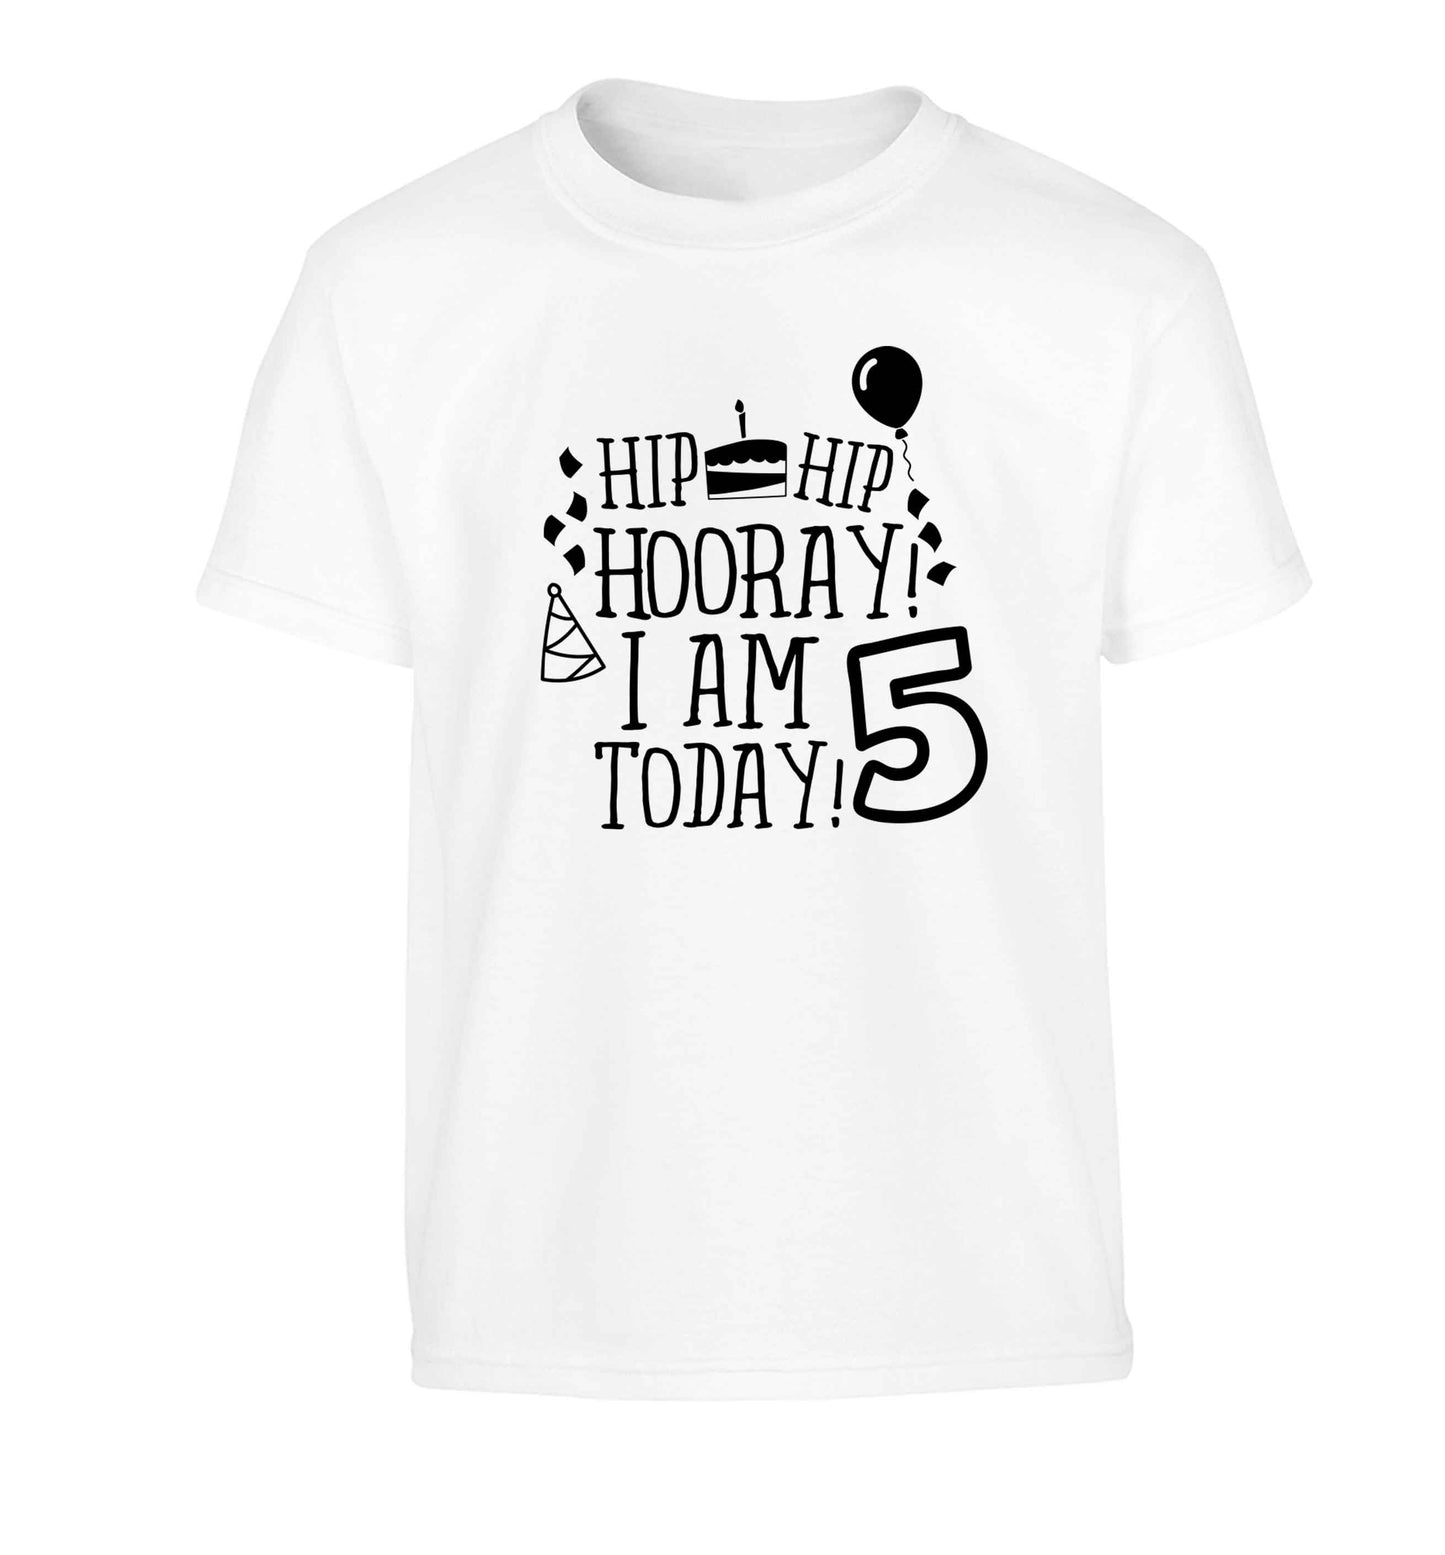 Hip hip hooray I am five today! Children's white Tshirt 12-13 Years